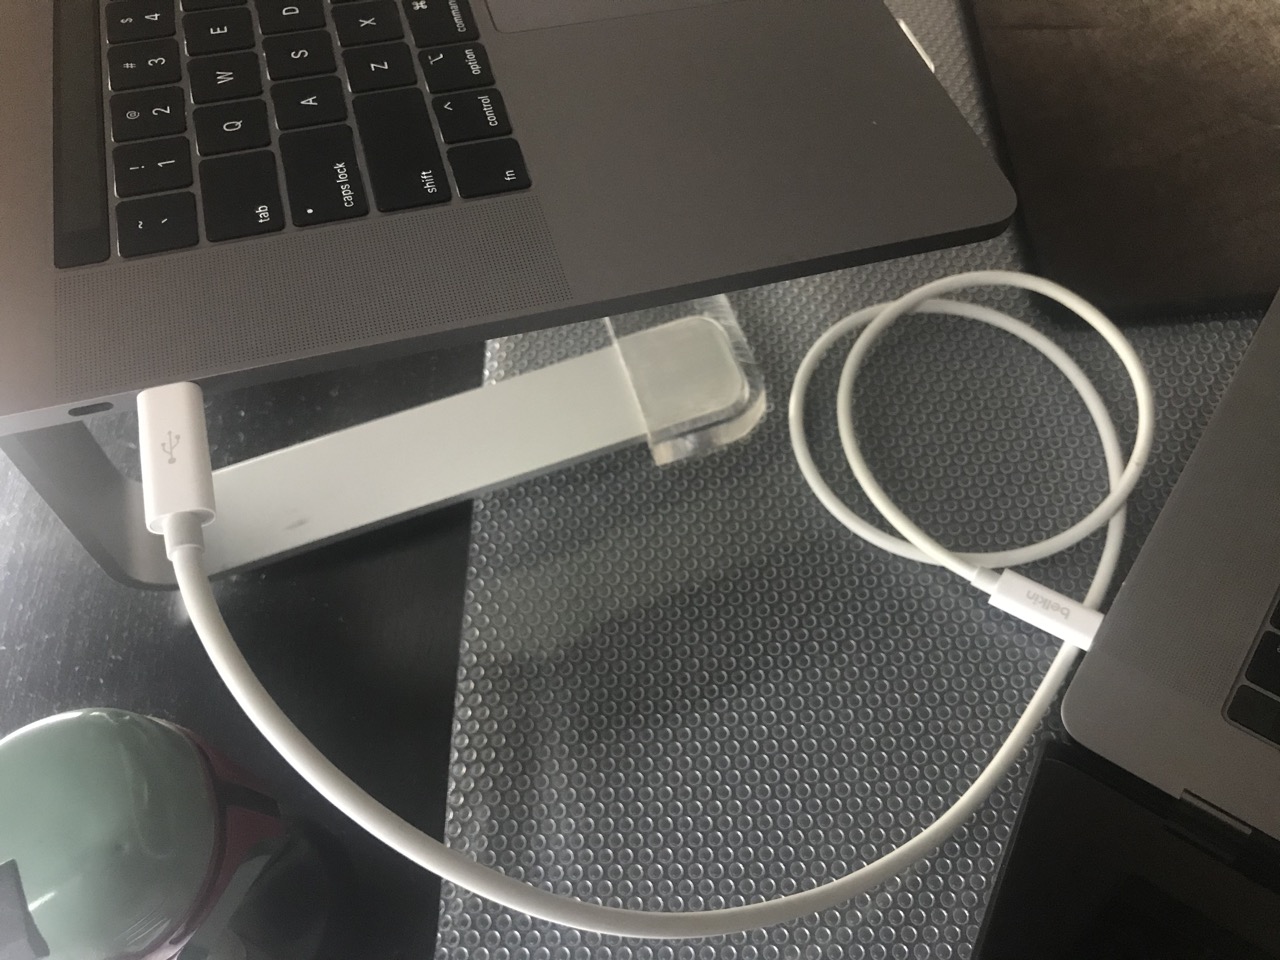 Transferring data between two Macs using a USB-C cable | Igor Kromin